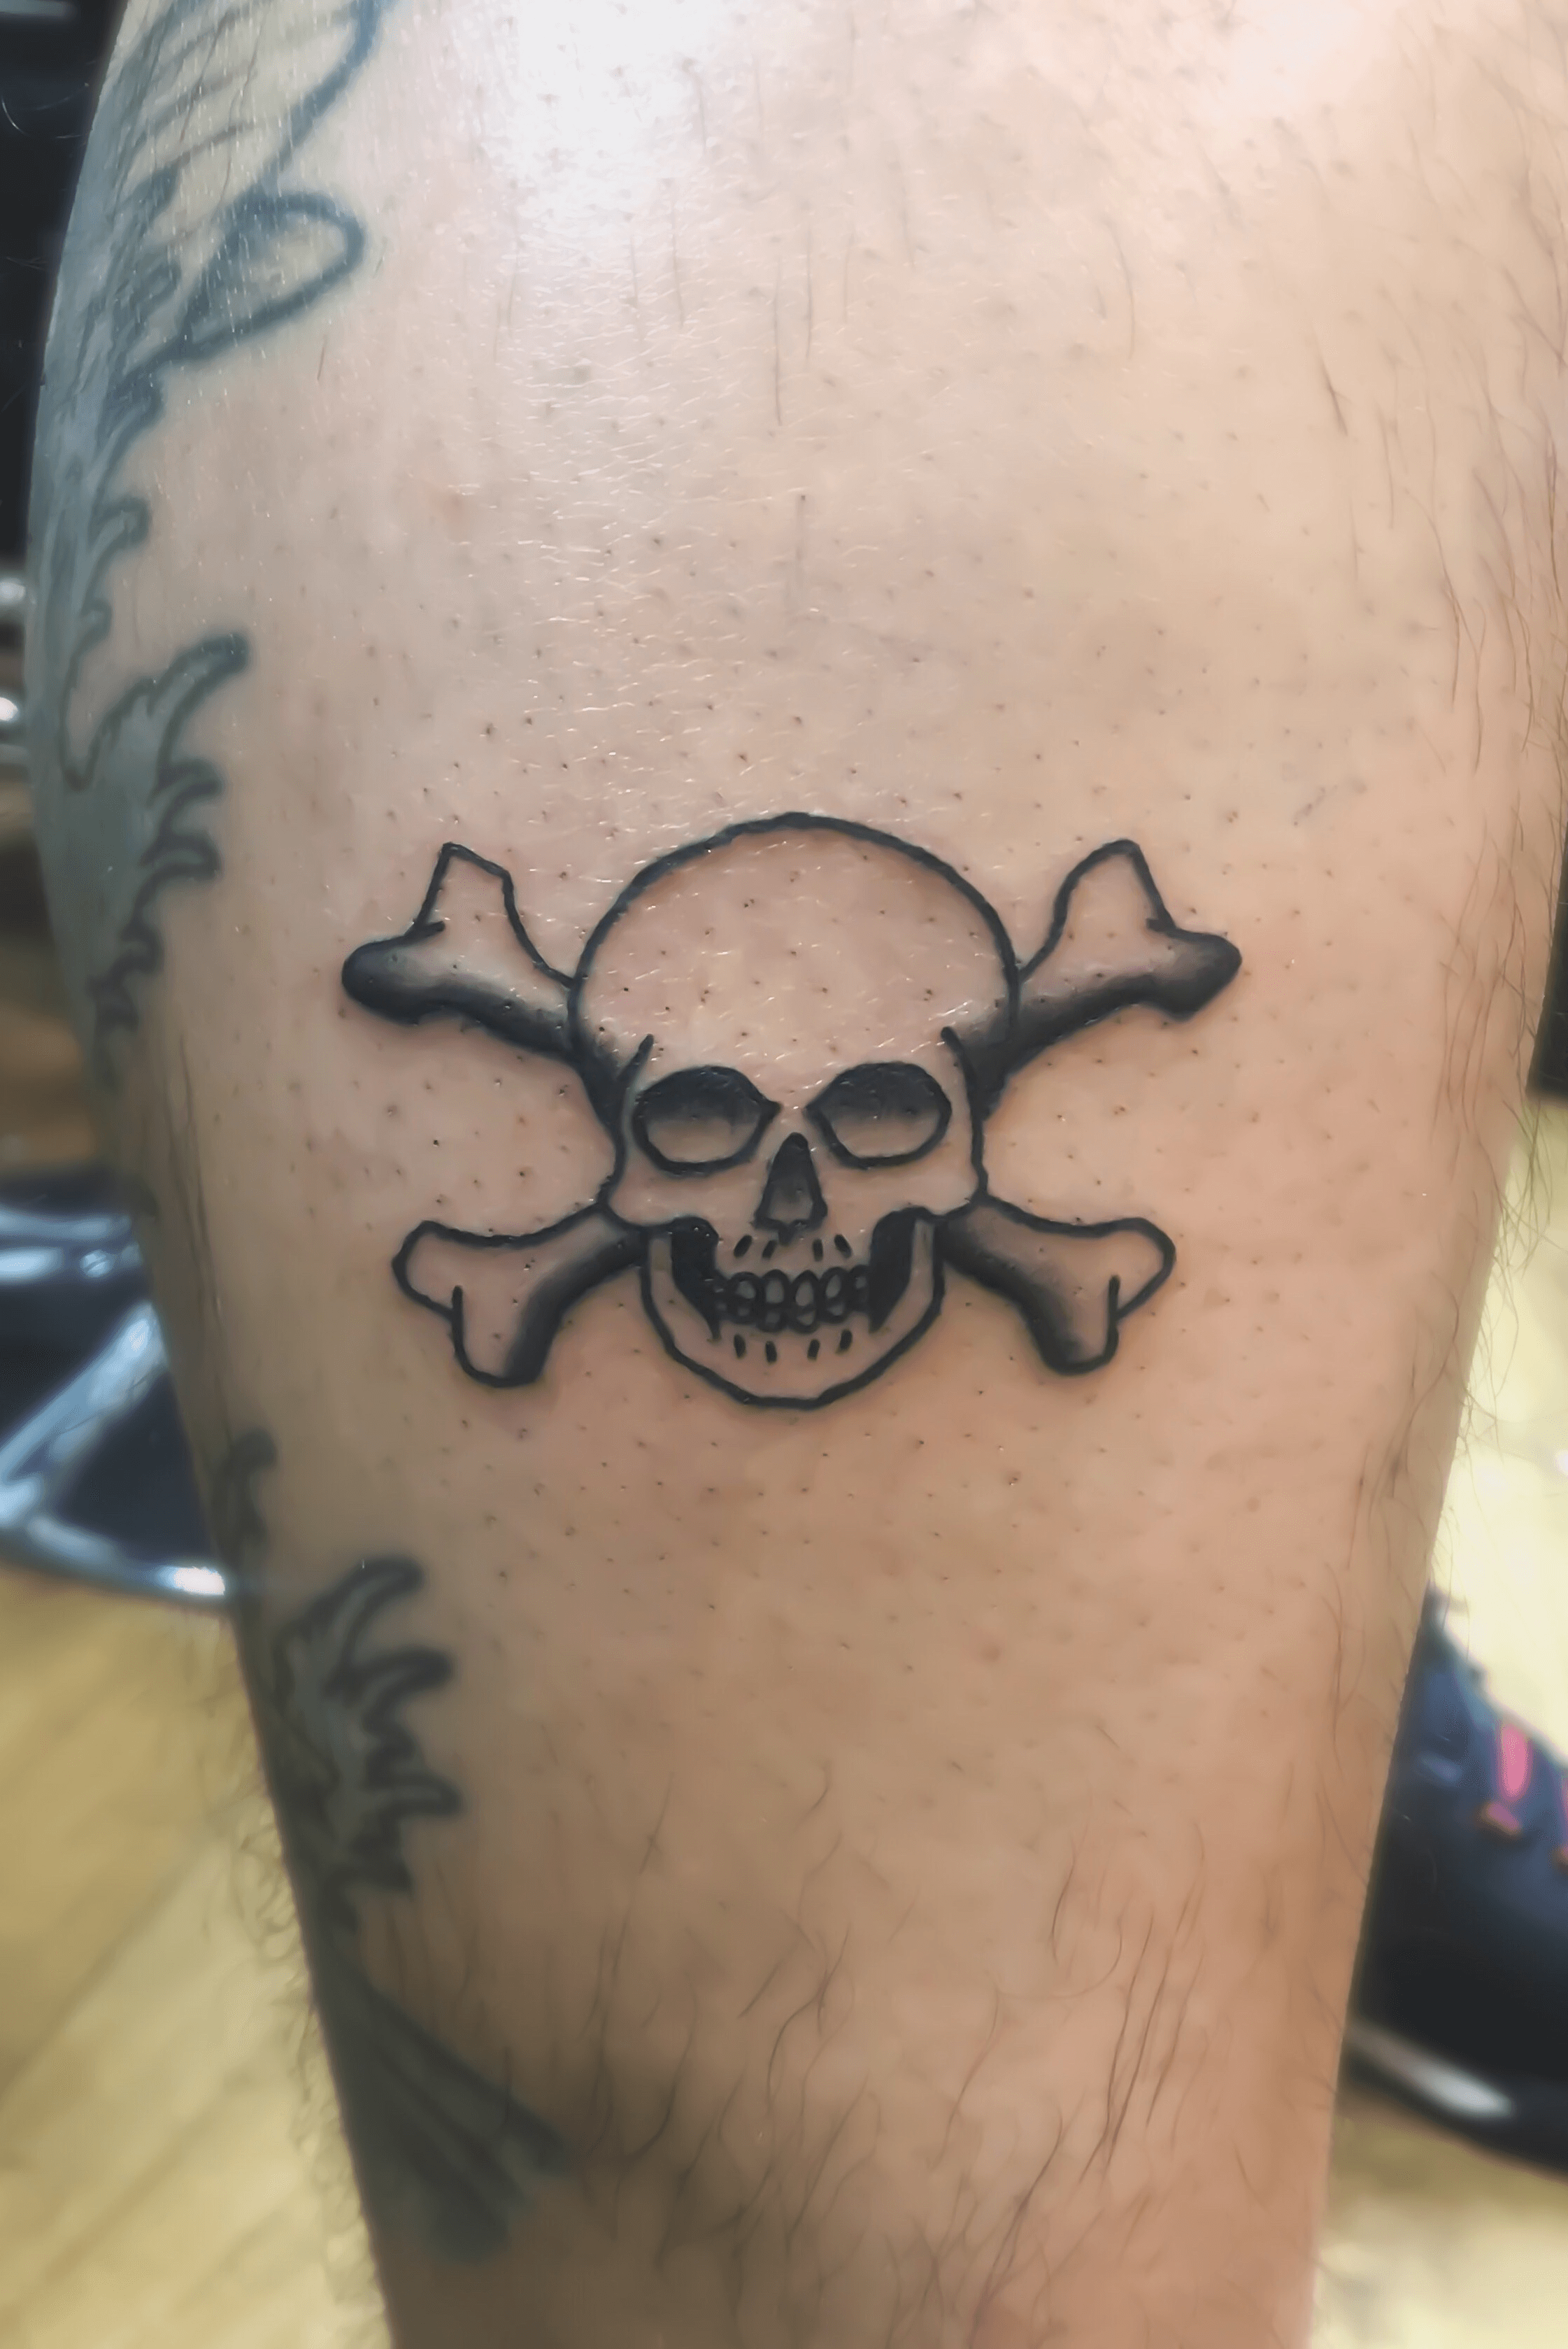 Skull and Bones Tattoo Society Belfast